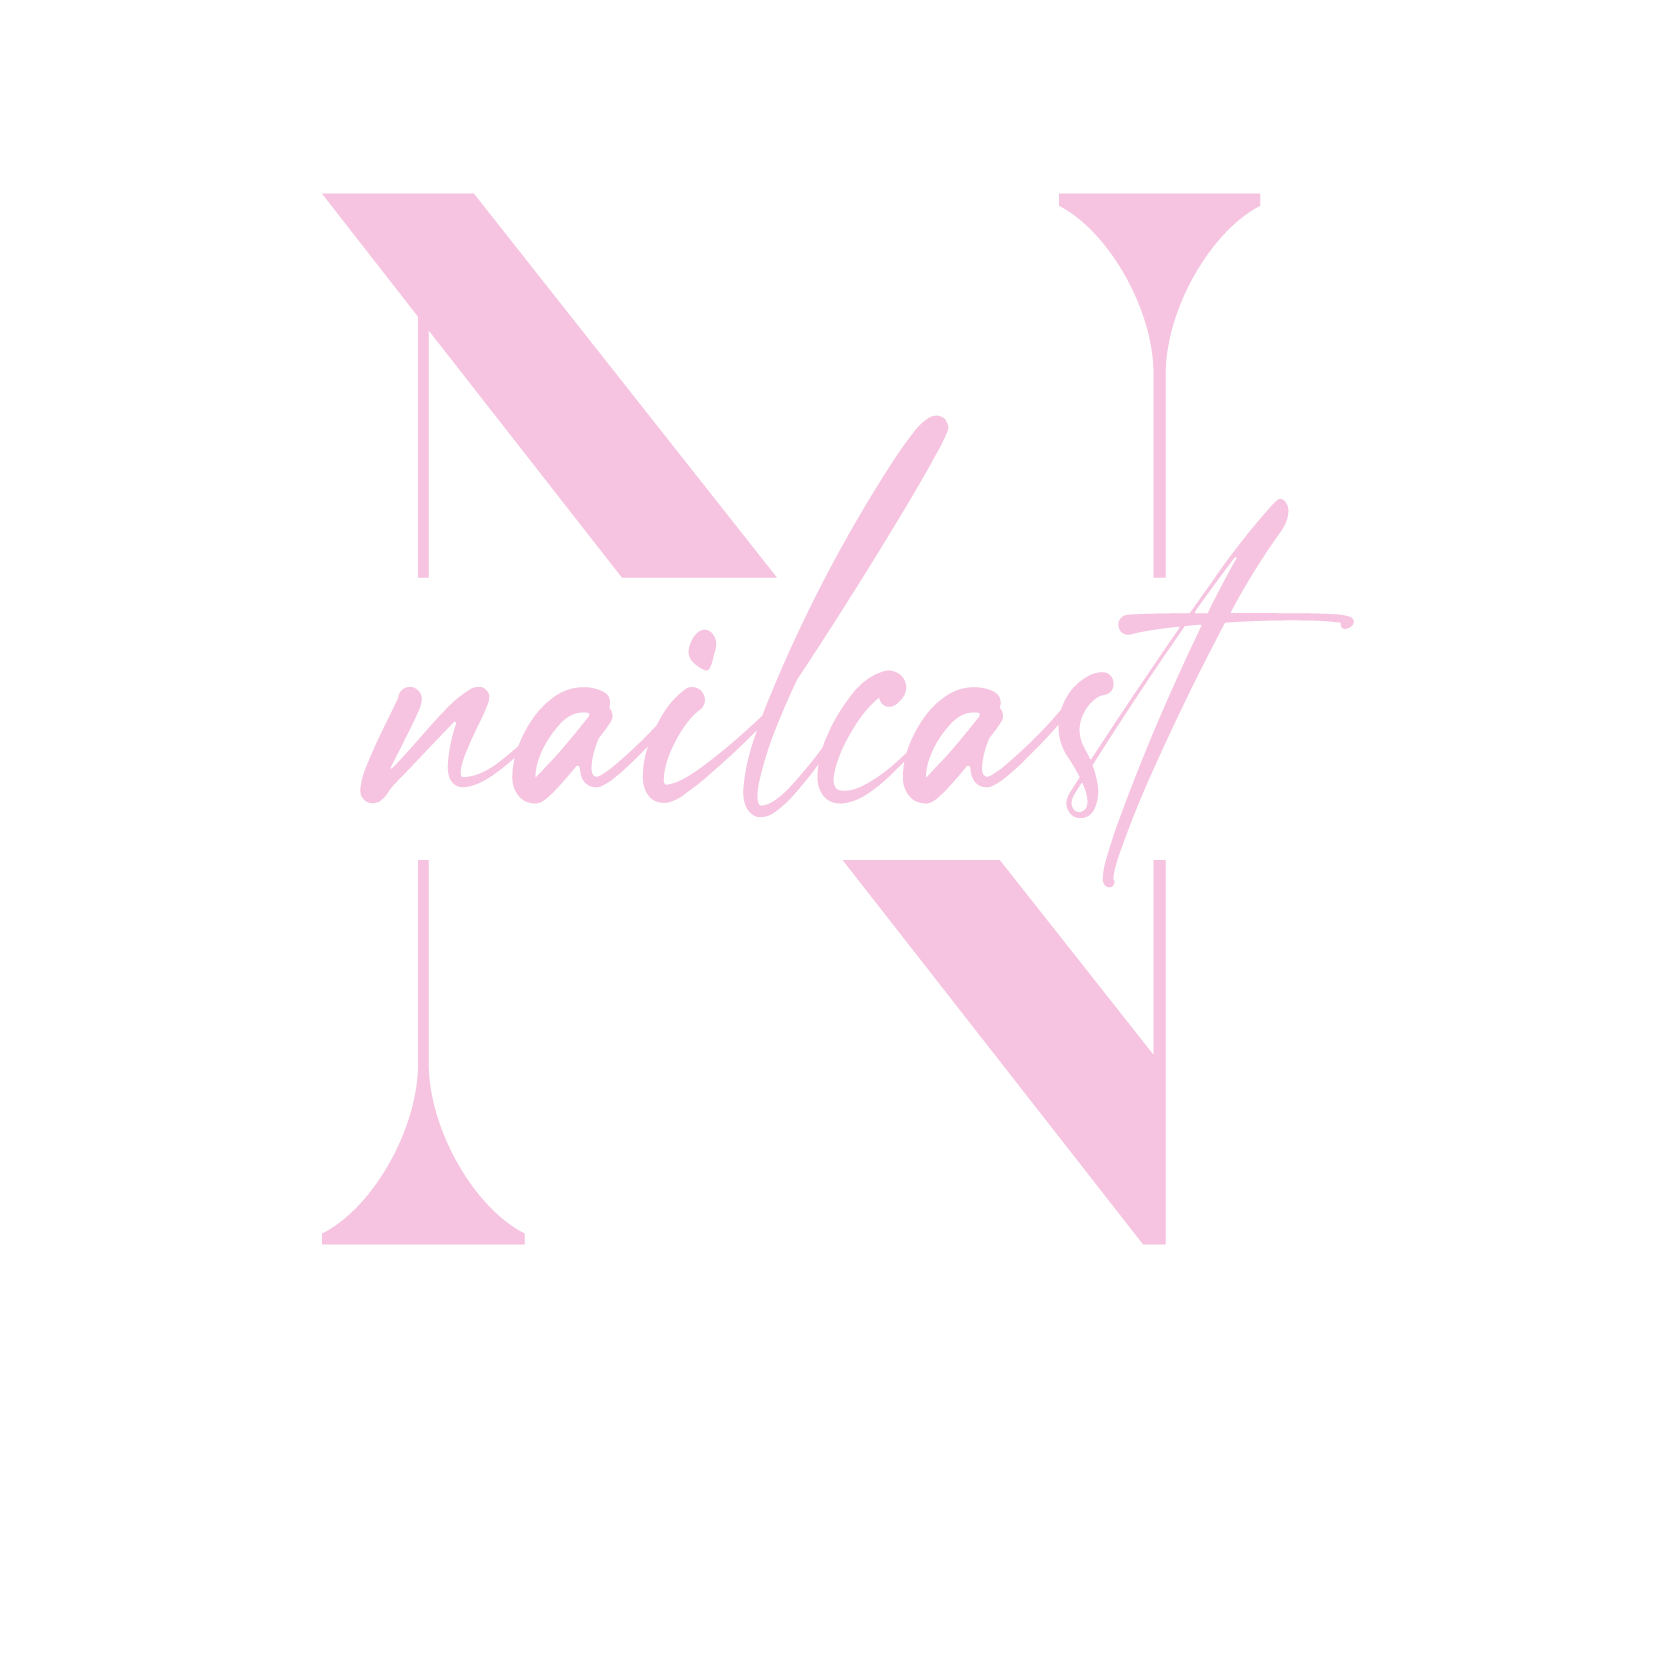 Nail cast